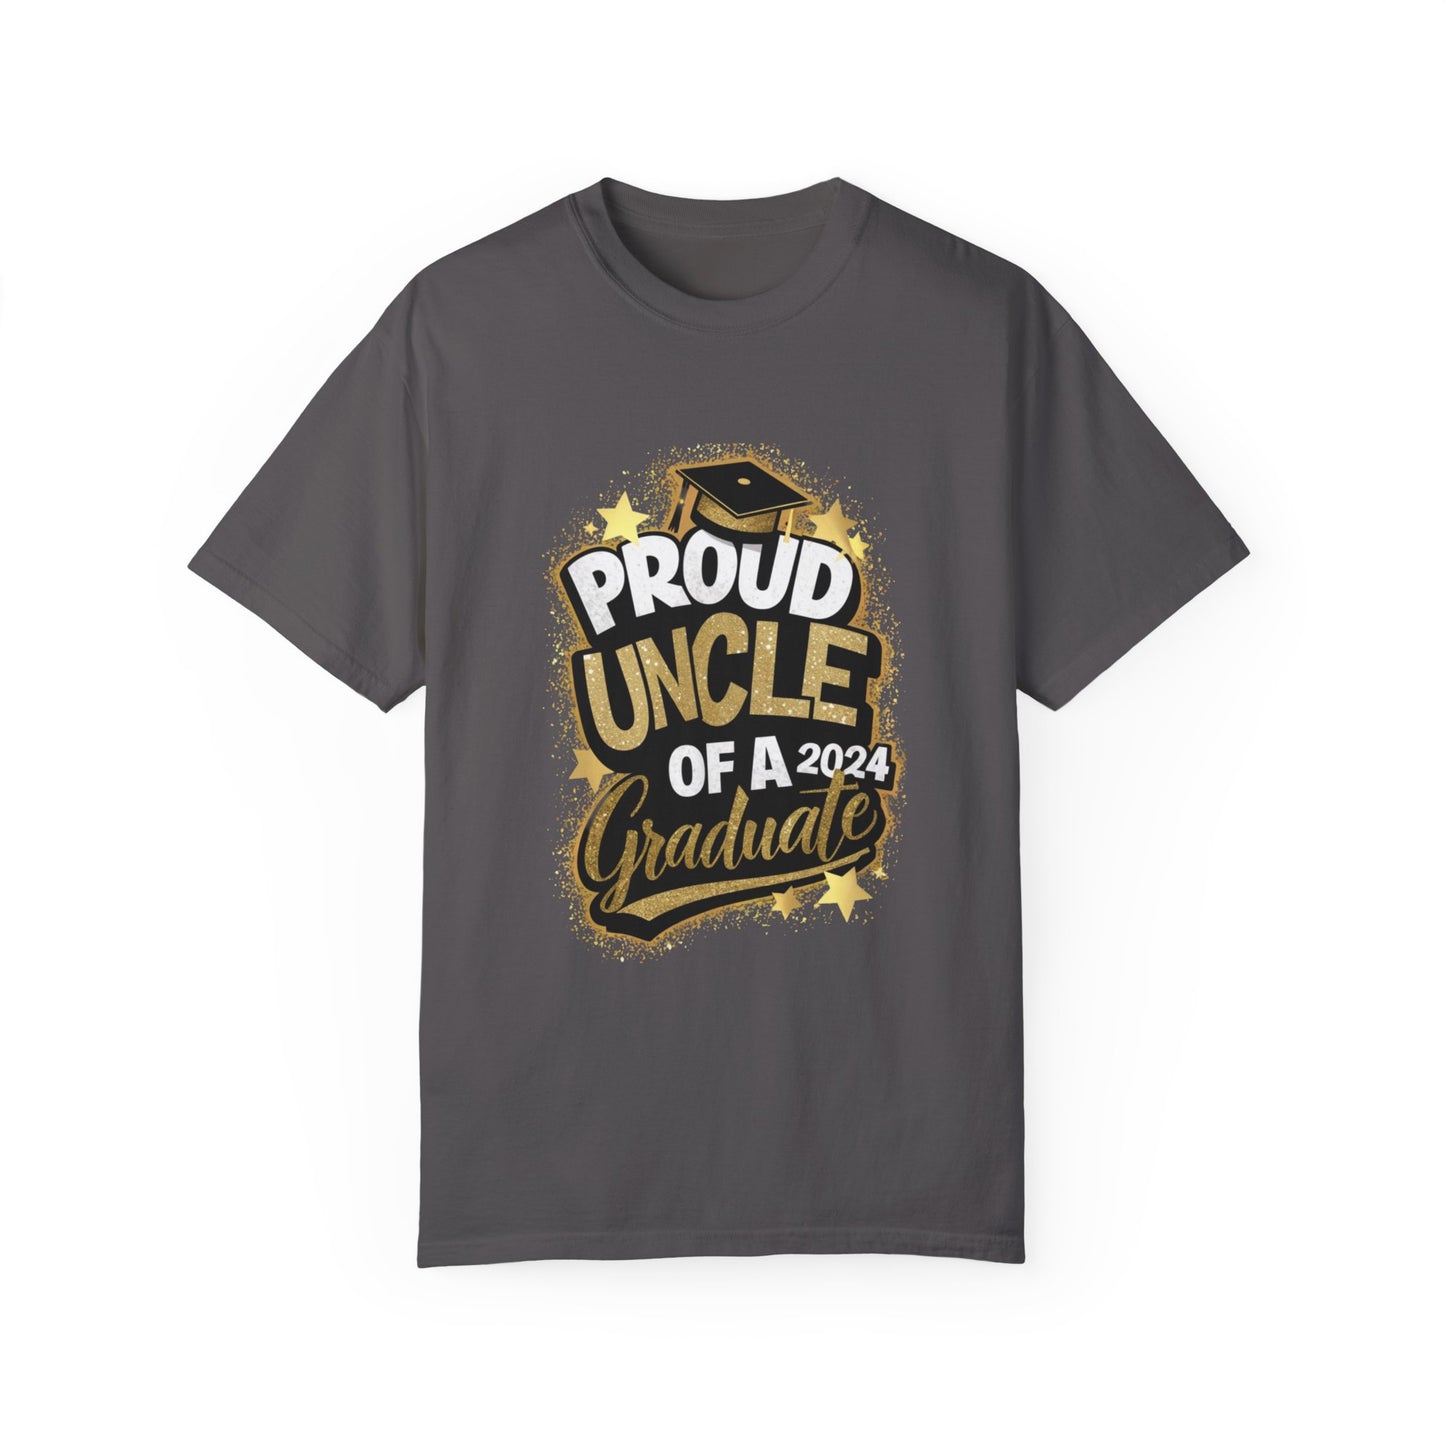 Proud Uncle of a 2024 Graduate Unisex Garment-dyed T-shirt Cotton Funny Humorous Graphic Soft Premium Unisex Men Women Graphite T-shirt Birthday Gift-8